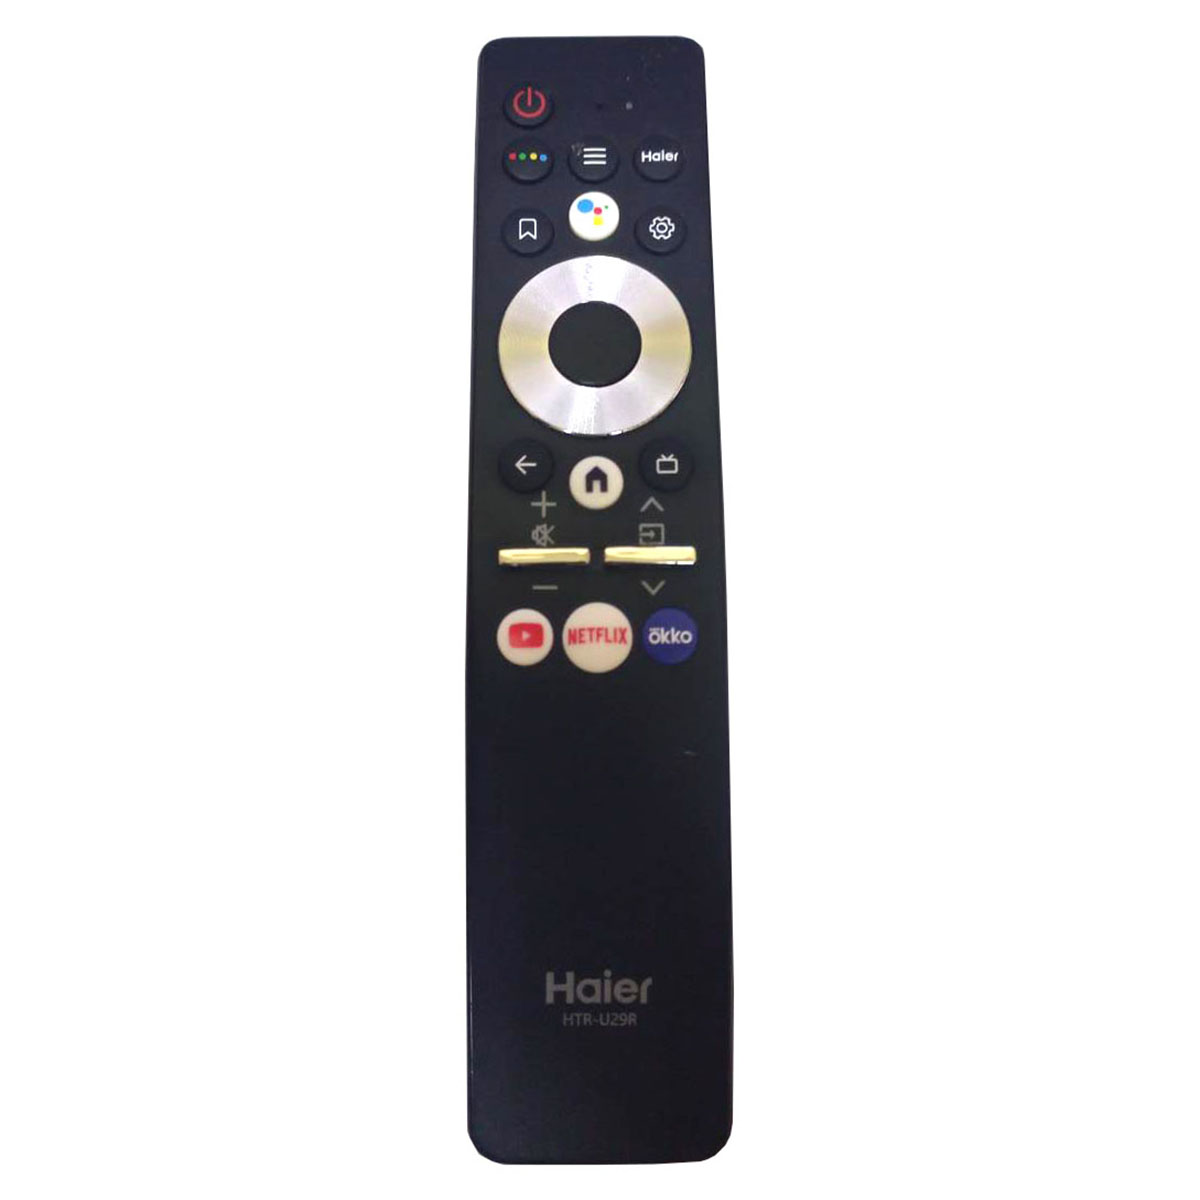 Haier телевизор s1 пульт. Philips hts8140. Пульт Haier HTR-u29r. Haier 32 Smart TV DX. Пульт для телевизора Haier HTR-u29r.